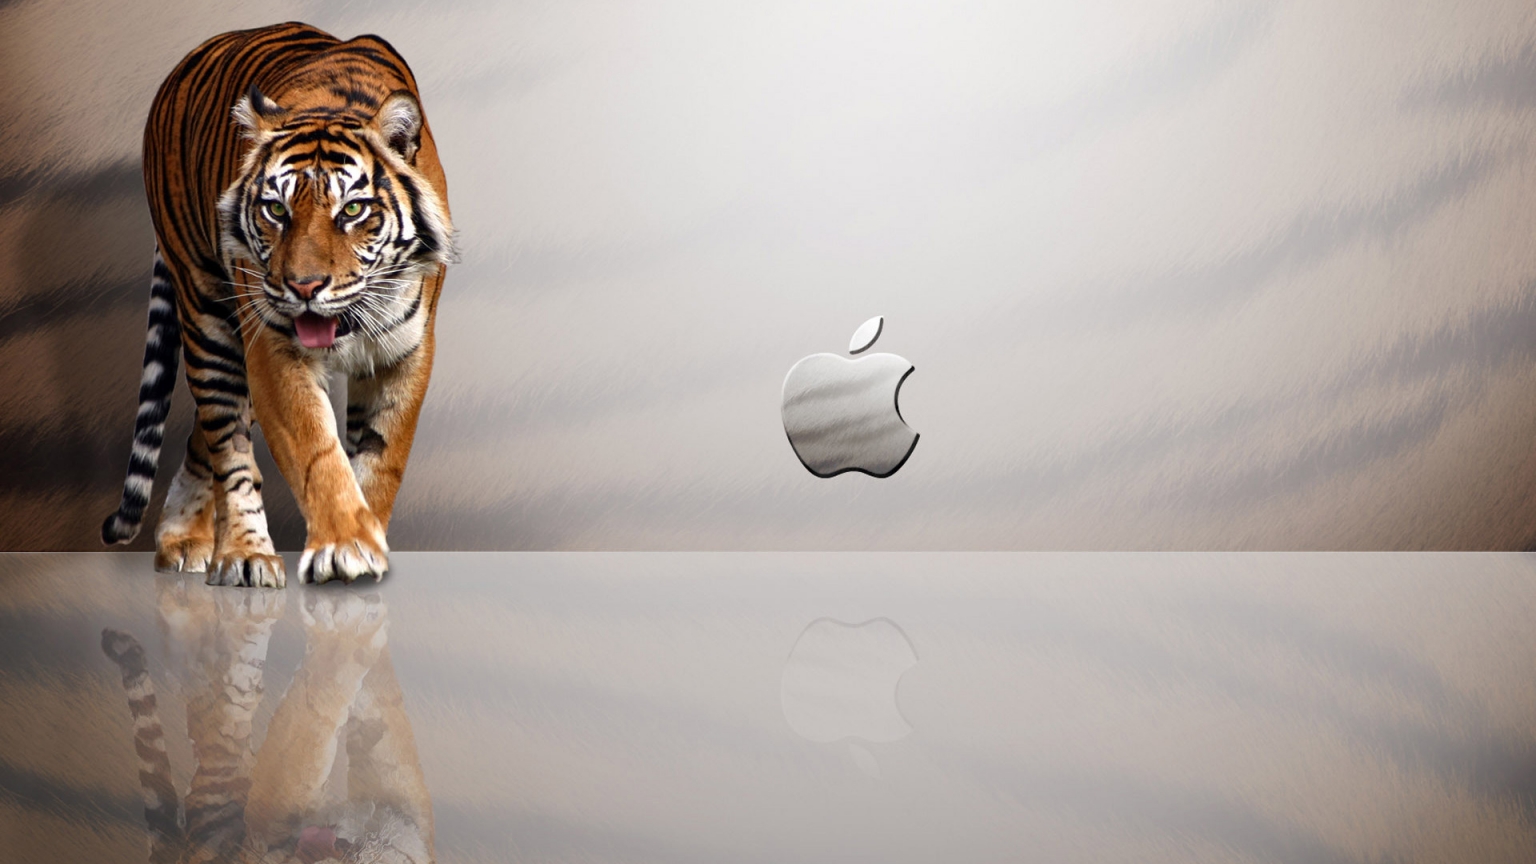 Tiger Apple for 1536 x 864 HDTV resolution